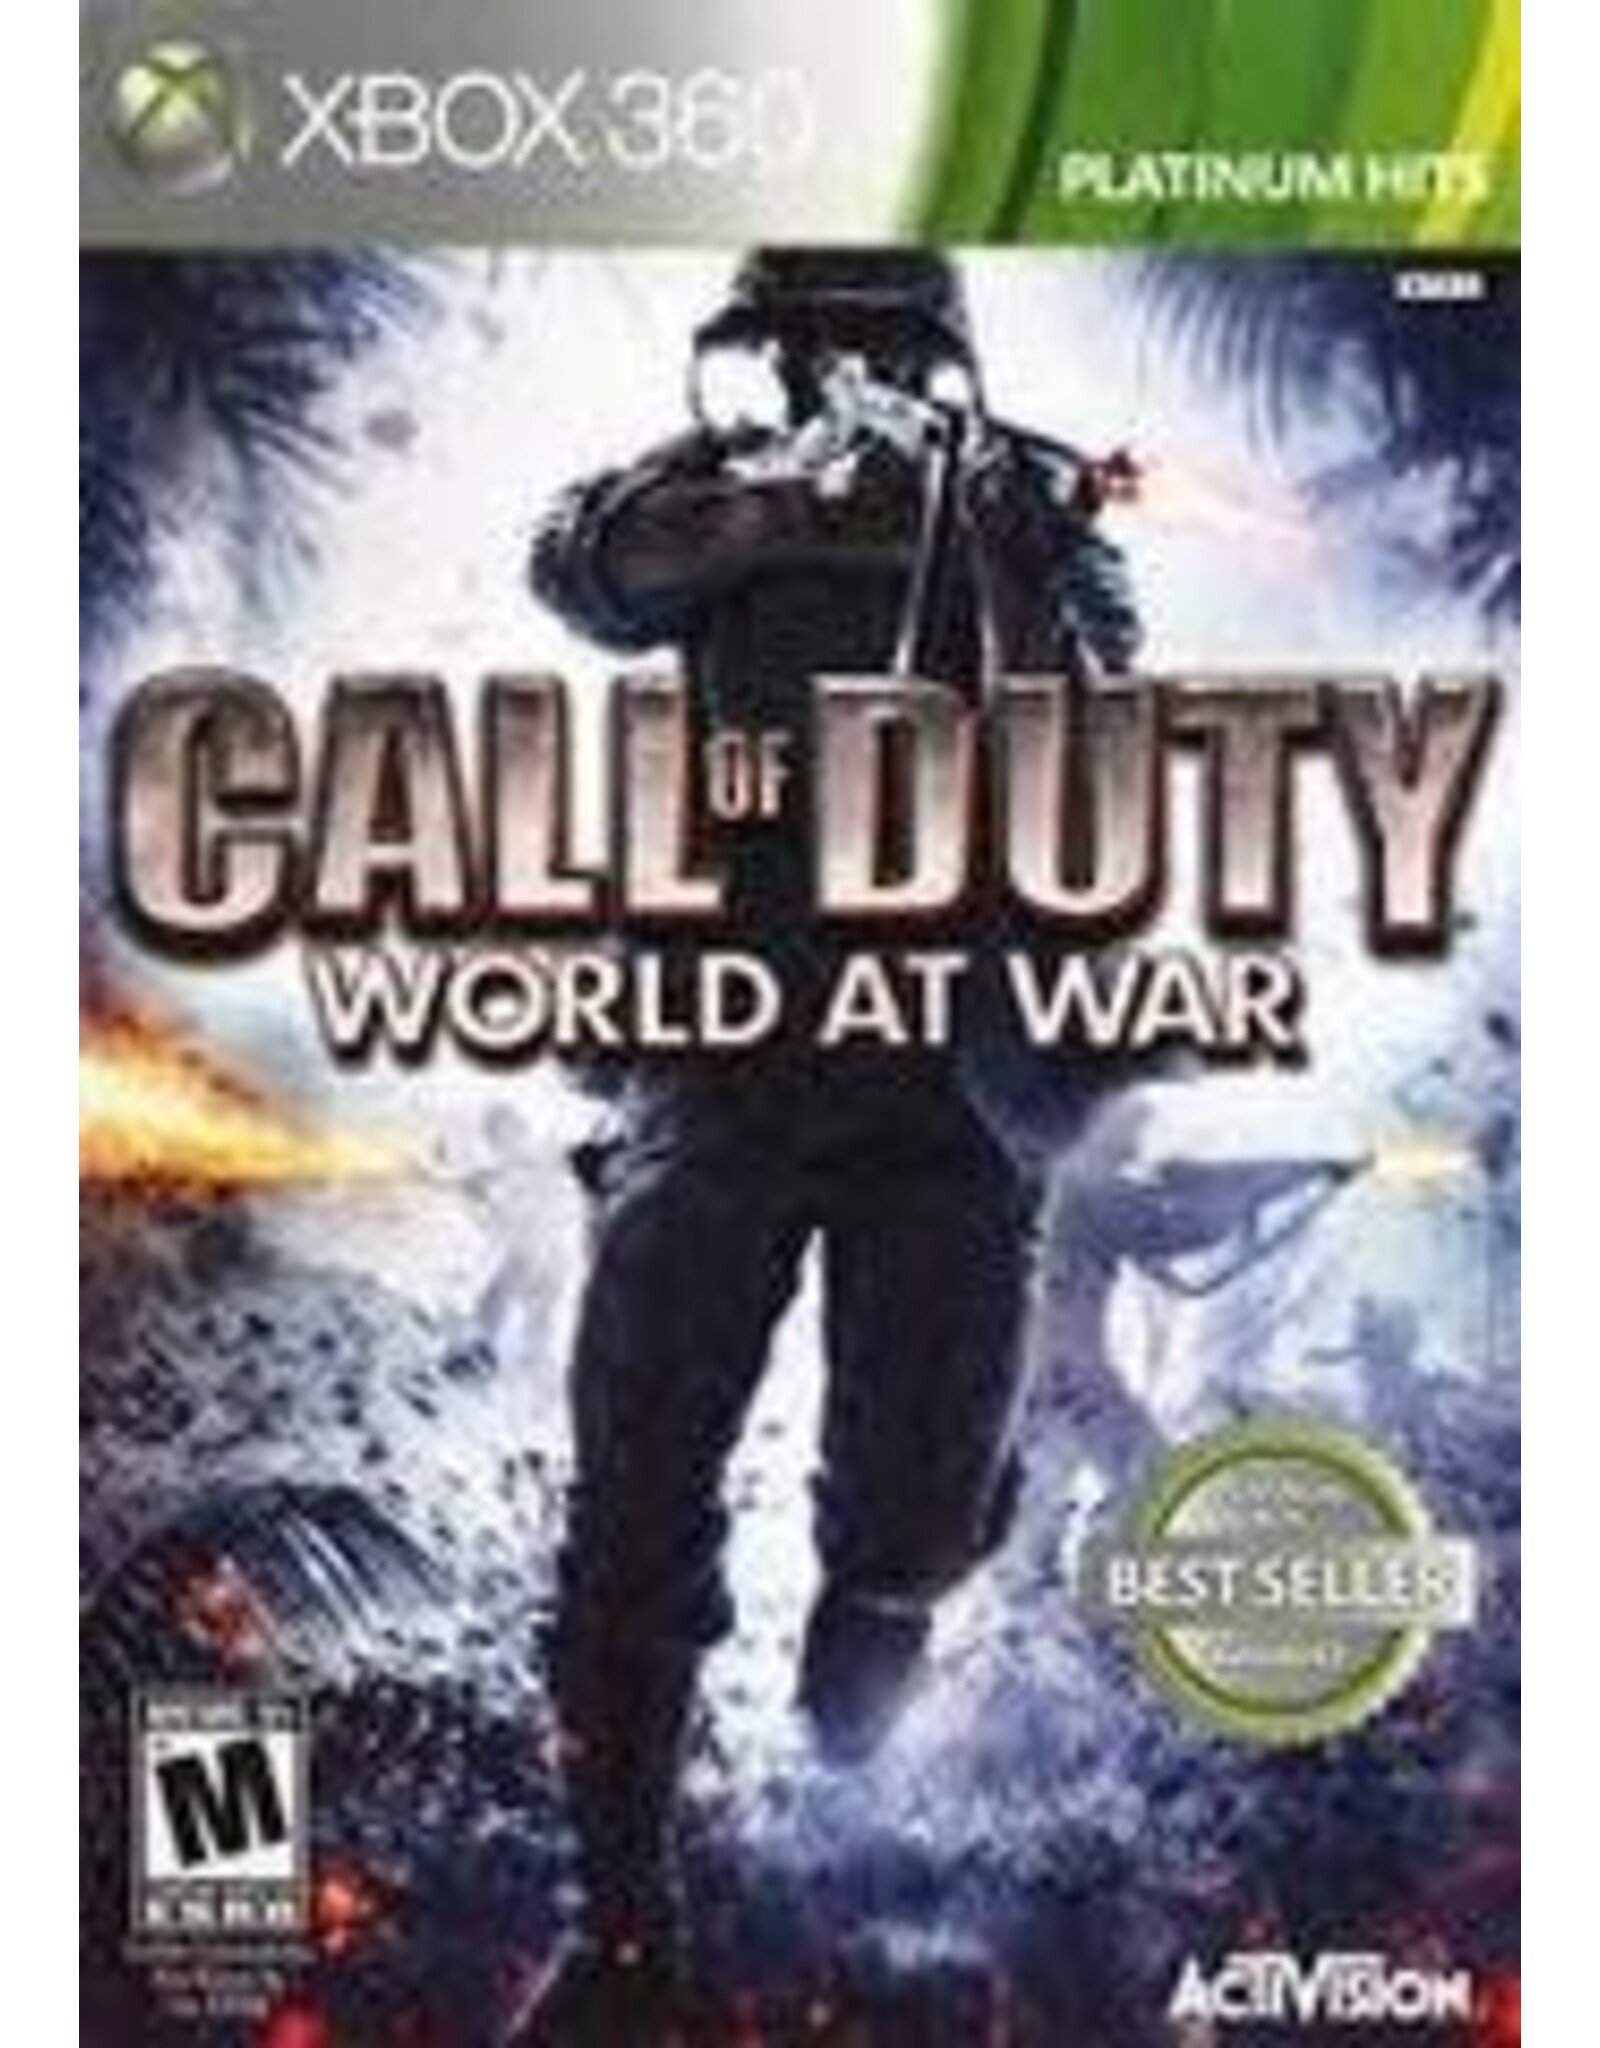 Xbox 360 Call of Duty World at War - Platinum Hits (Used)